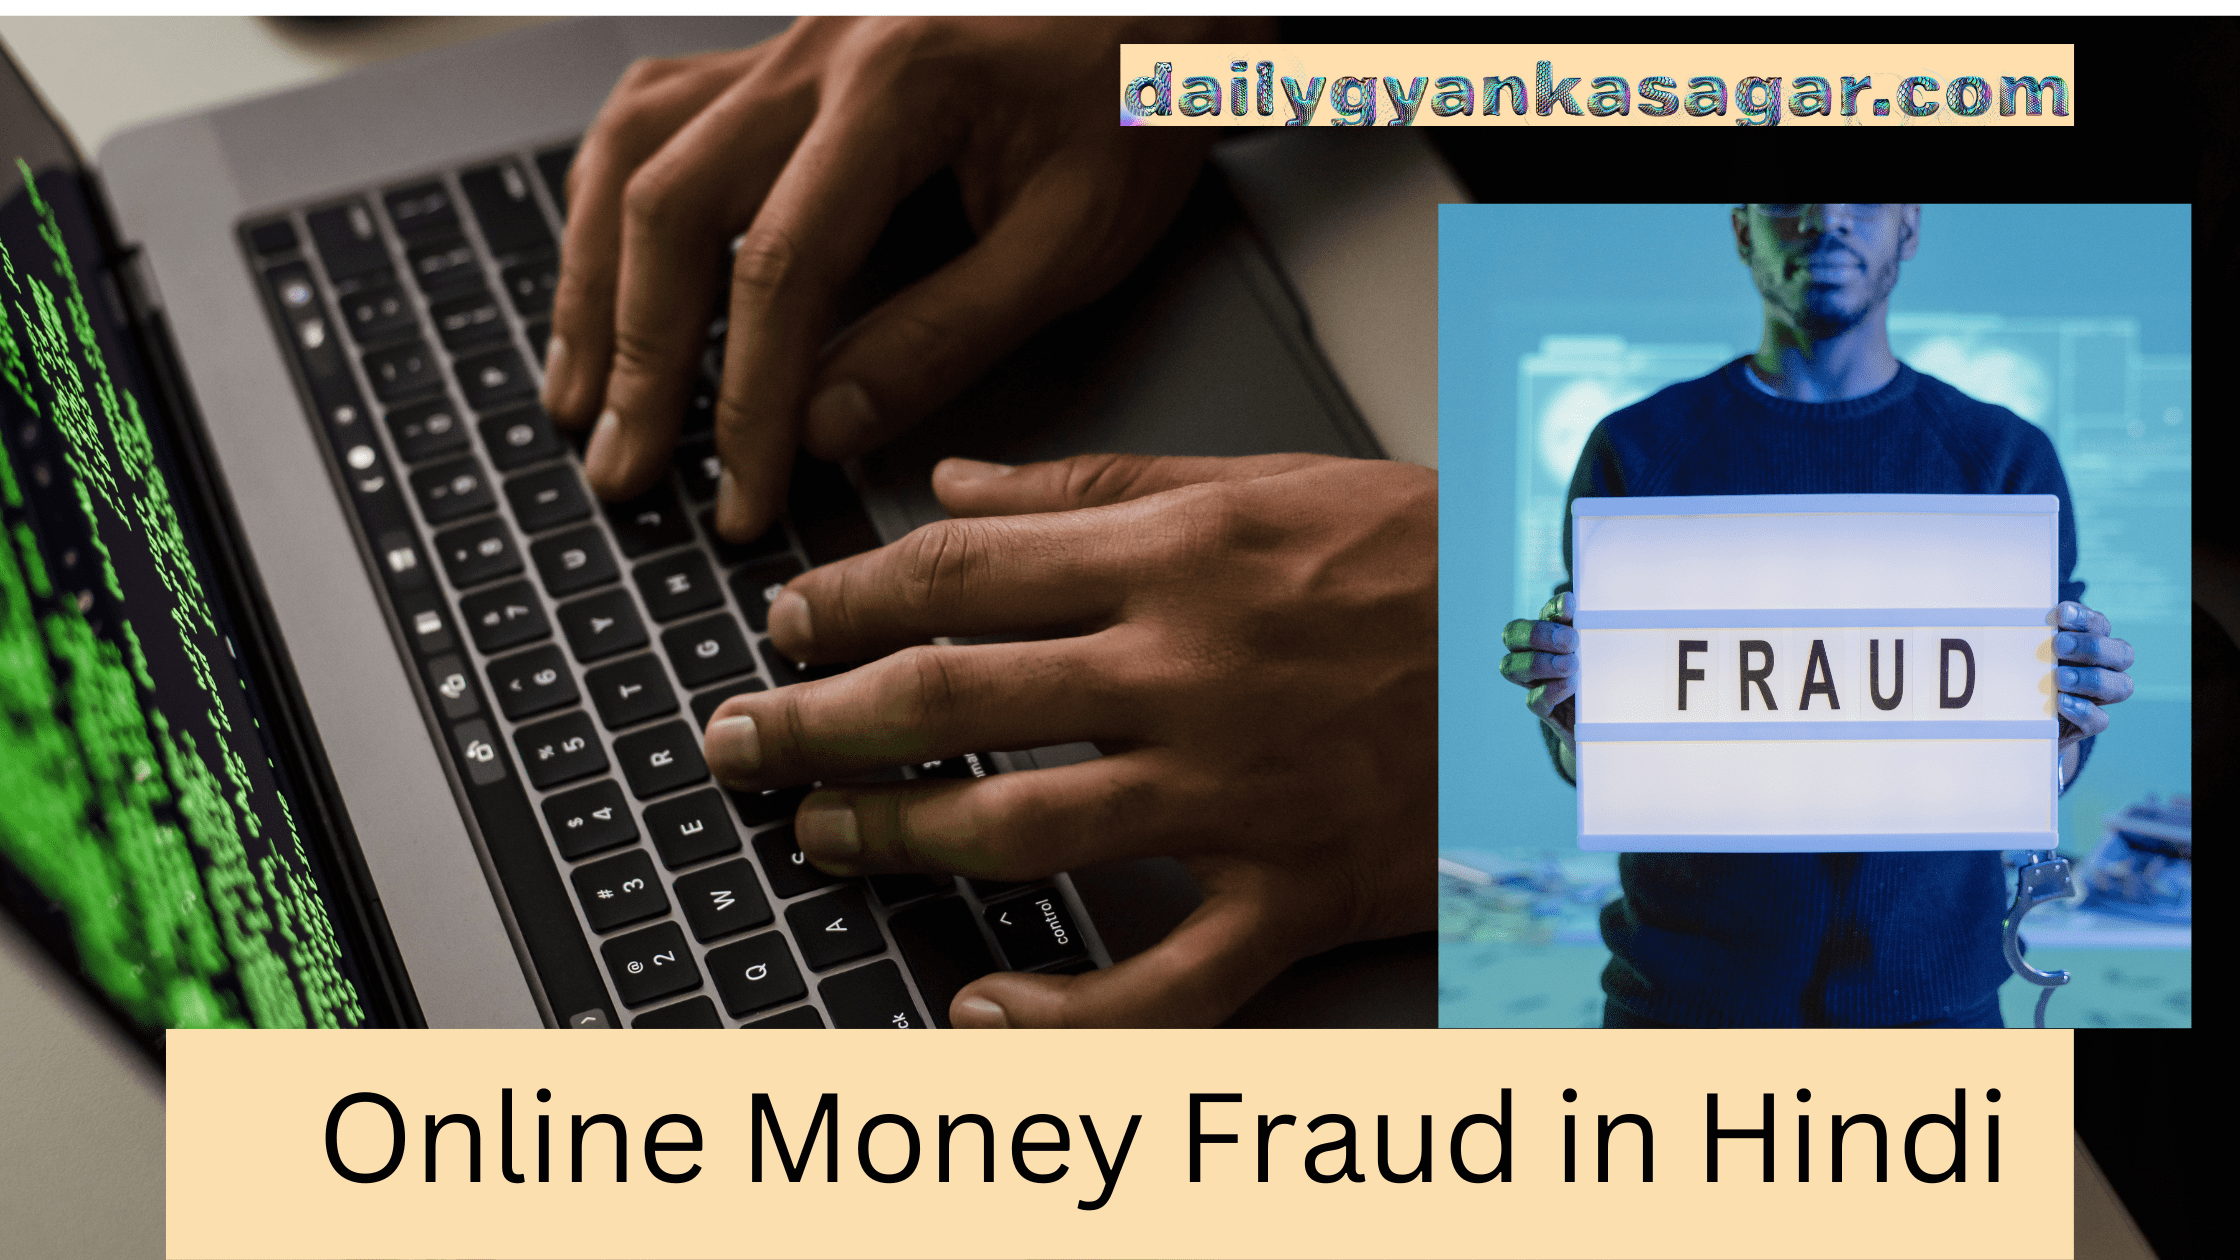 Online Money Fraud in Hindi